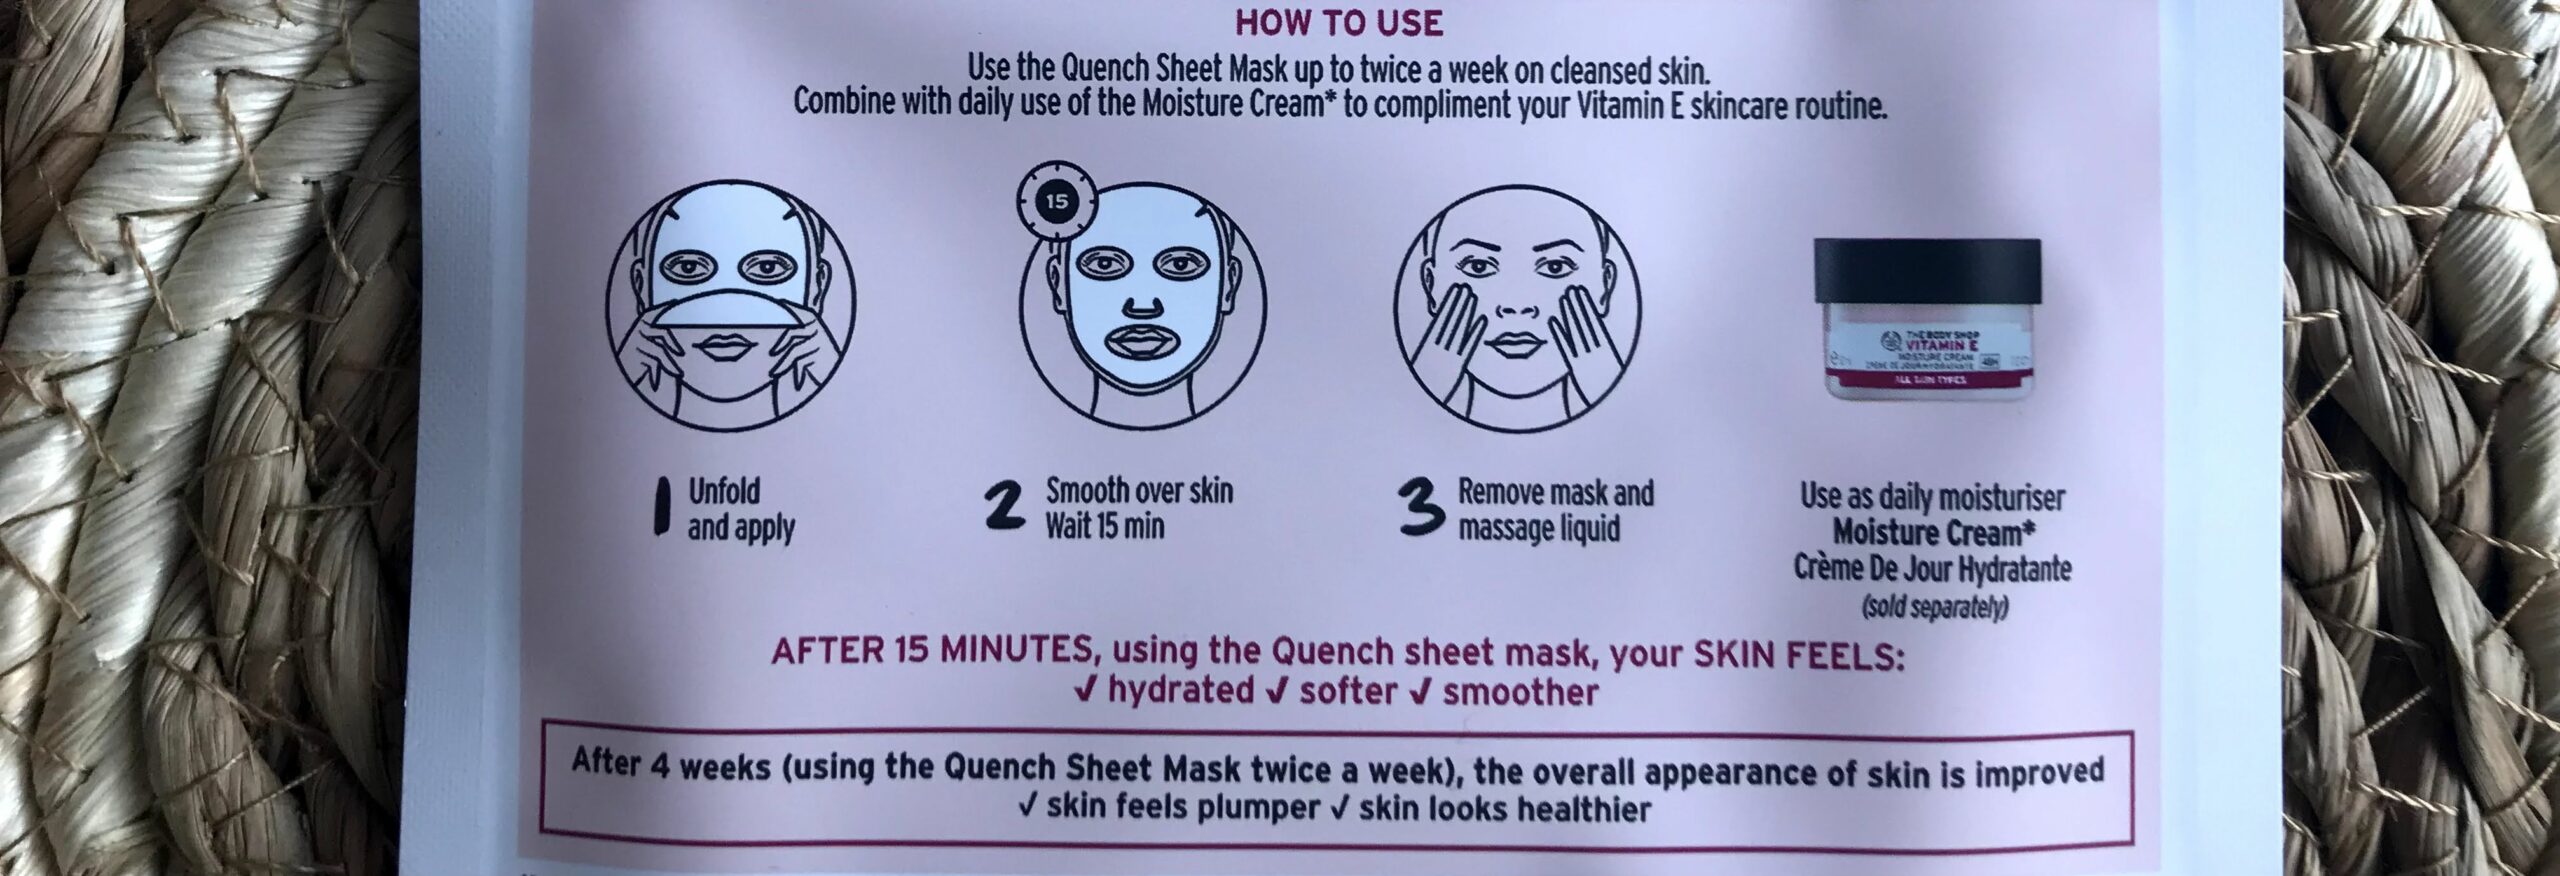 the body shop vitamin e sheet mask